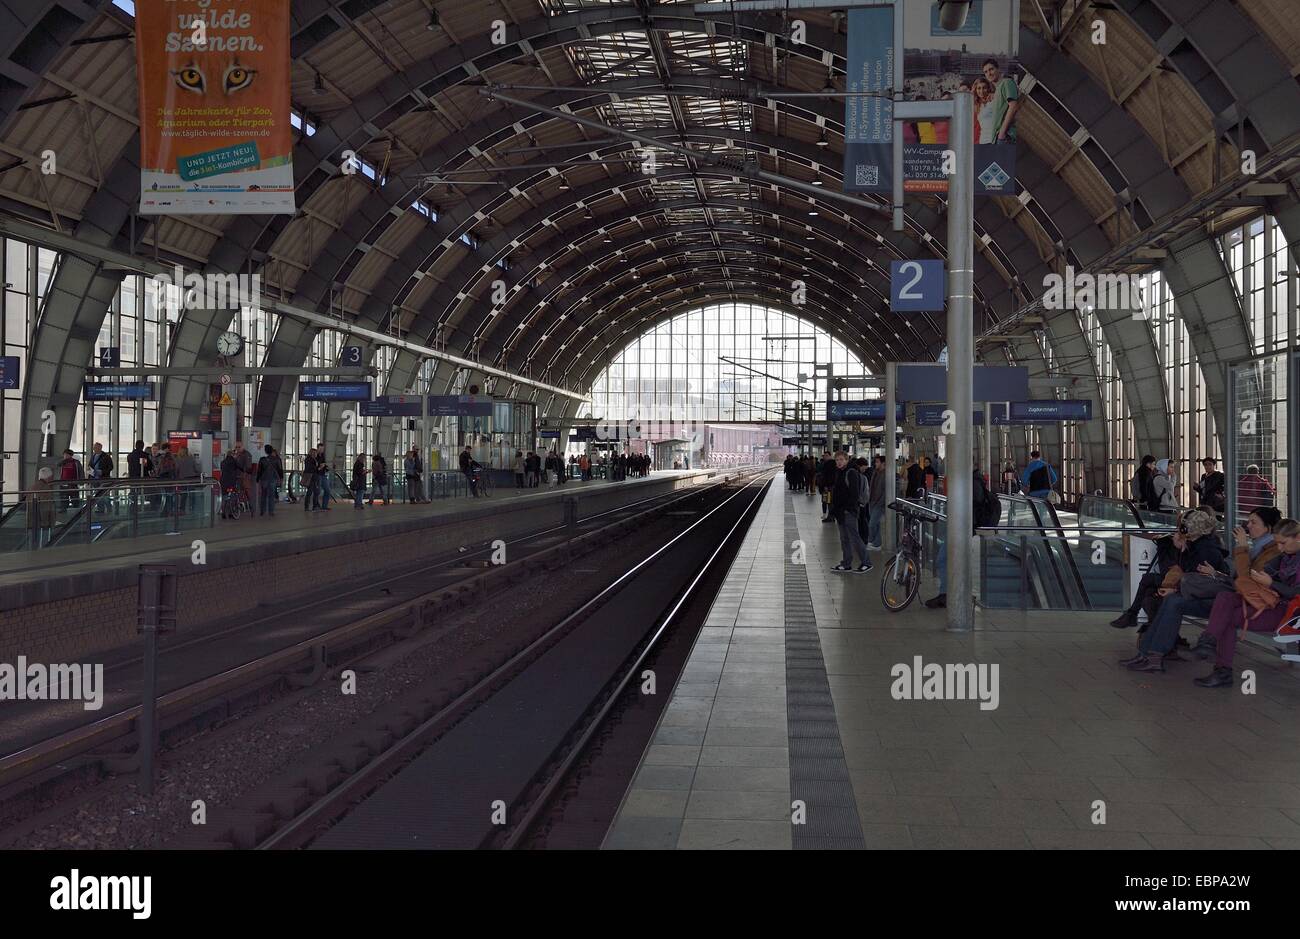 Alexanderplatz Bahnhof station Berlin Germany Stock Photo